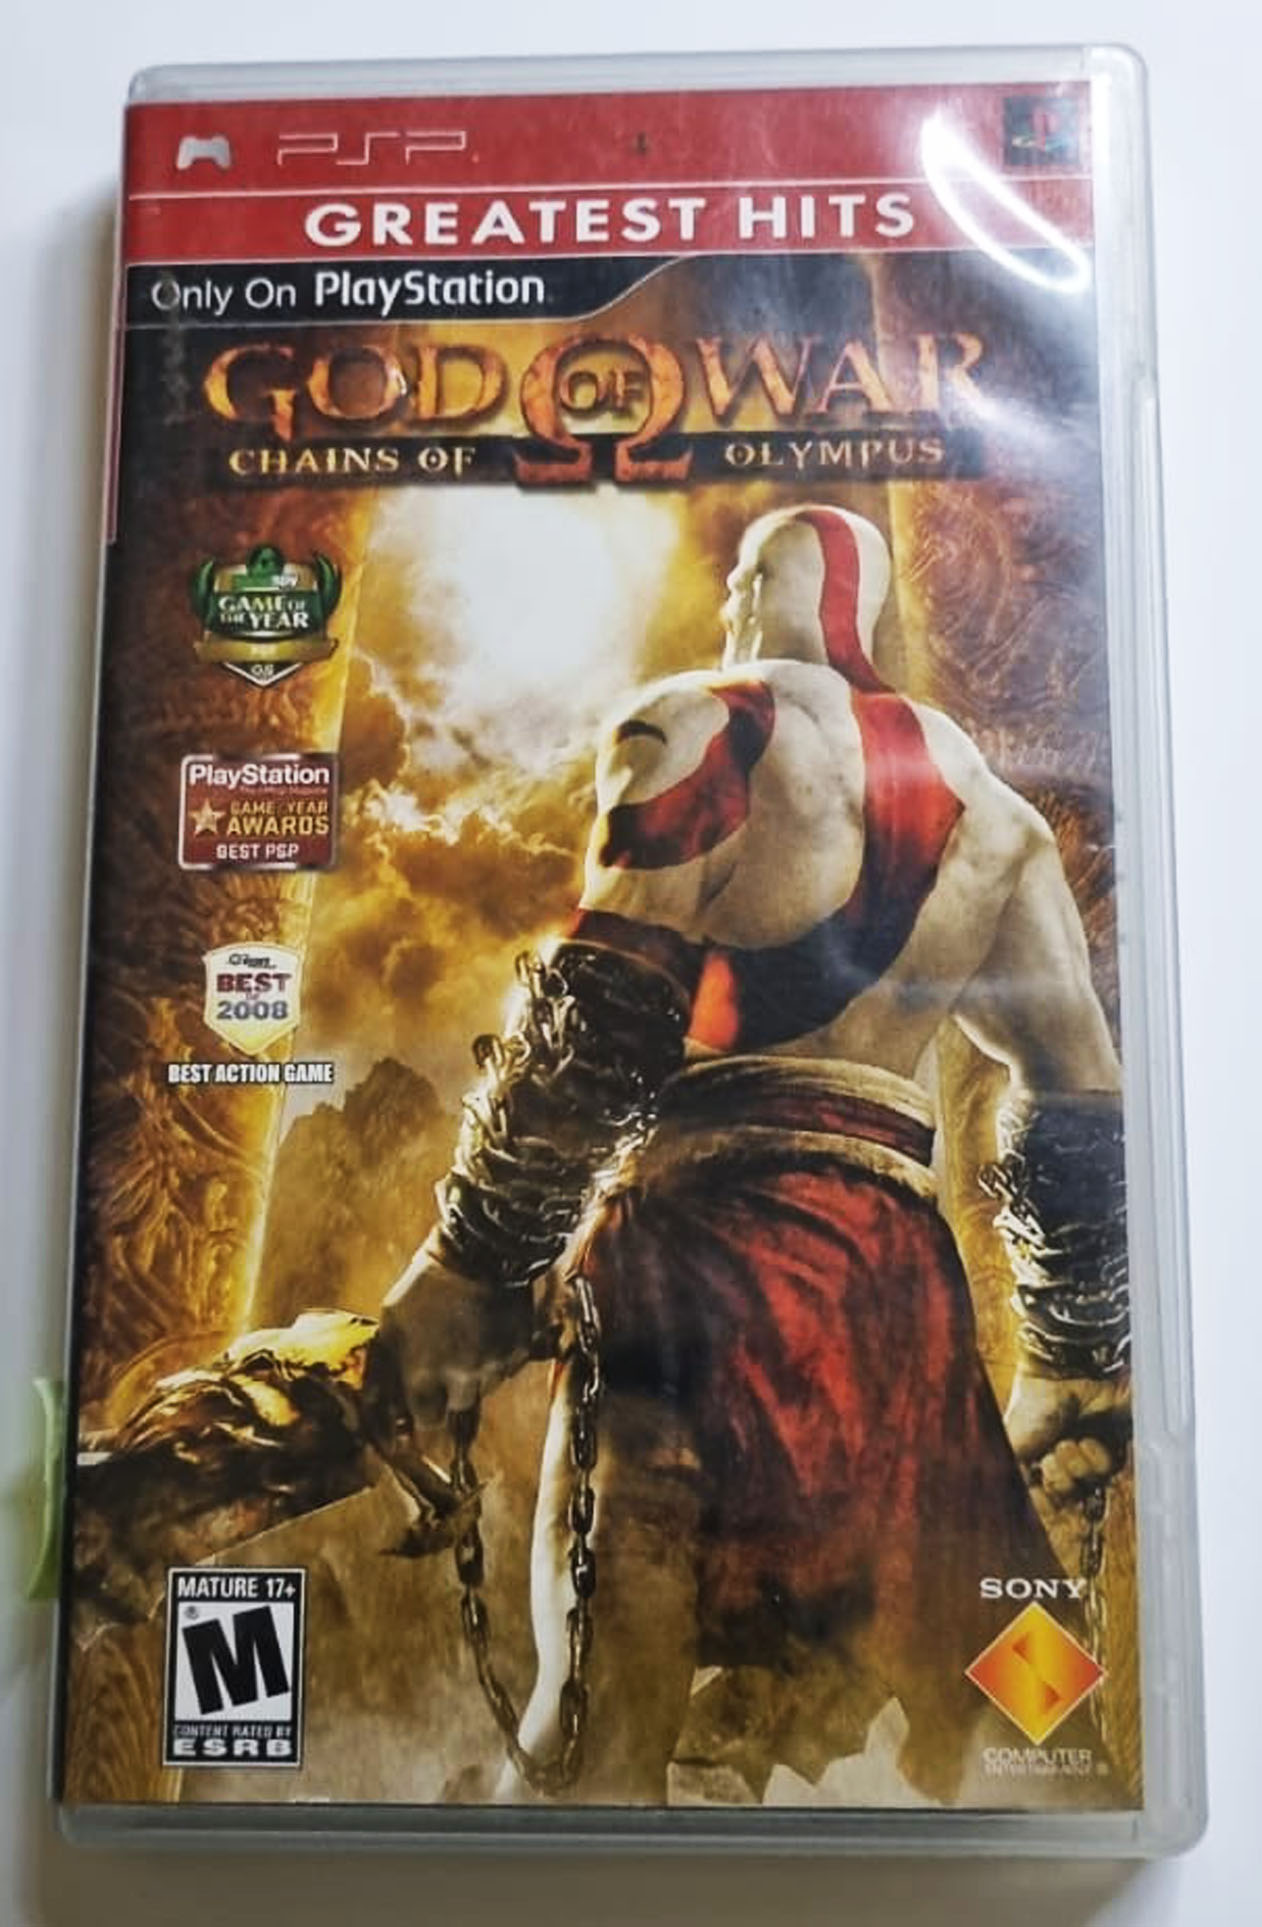 God of War: Chains of Olympus - Desciclopédia